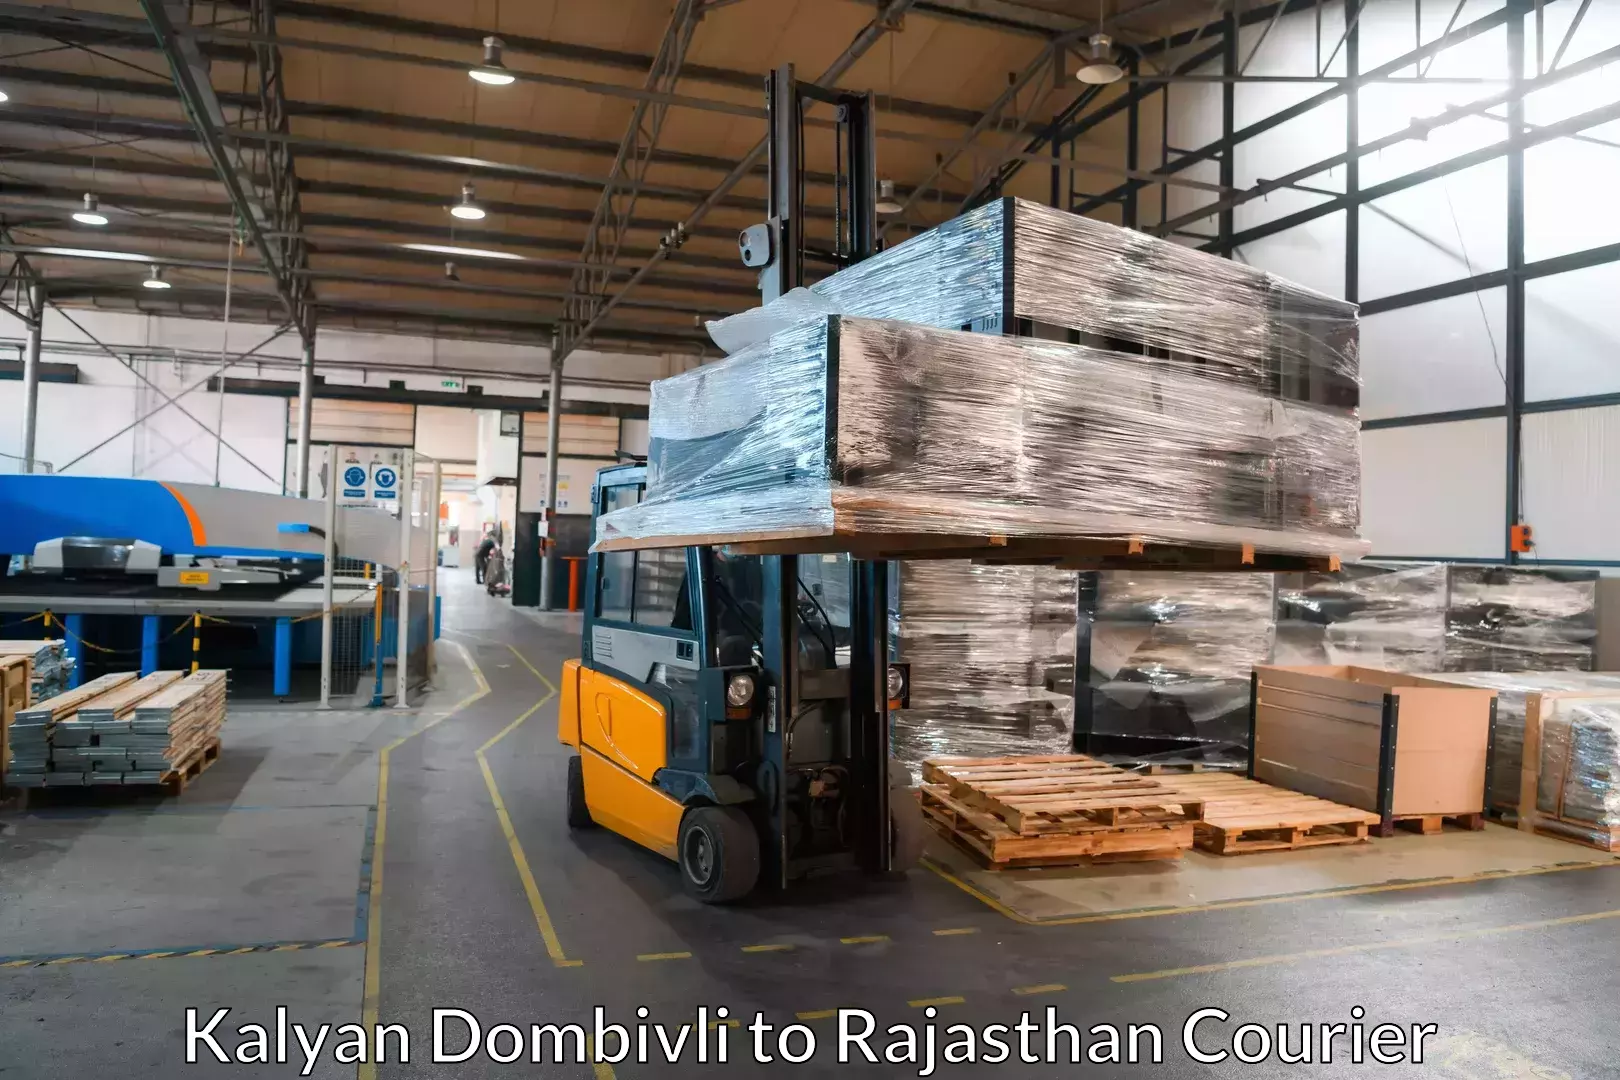 Professional movers and packers Kalyan Dombivli to Jhunjhunu